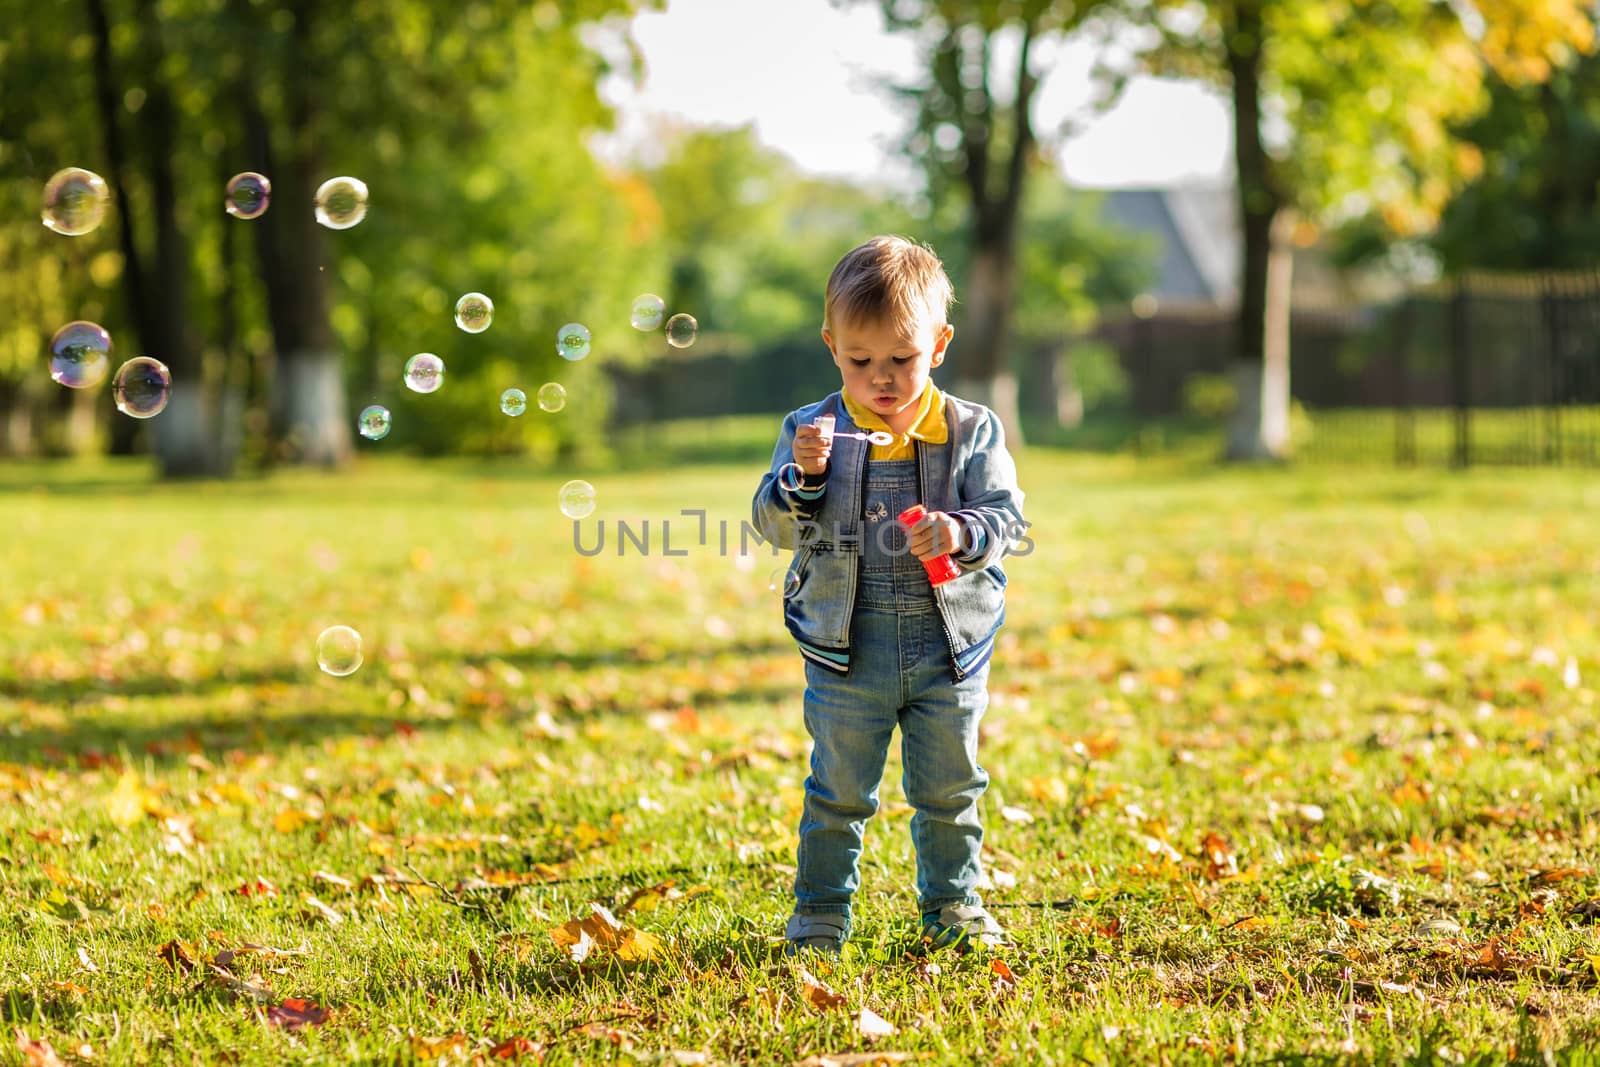 A little boy in denim clothes blows bubbles in the autumn park.